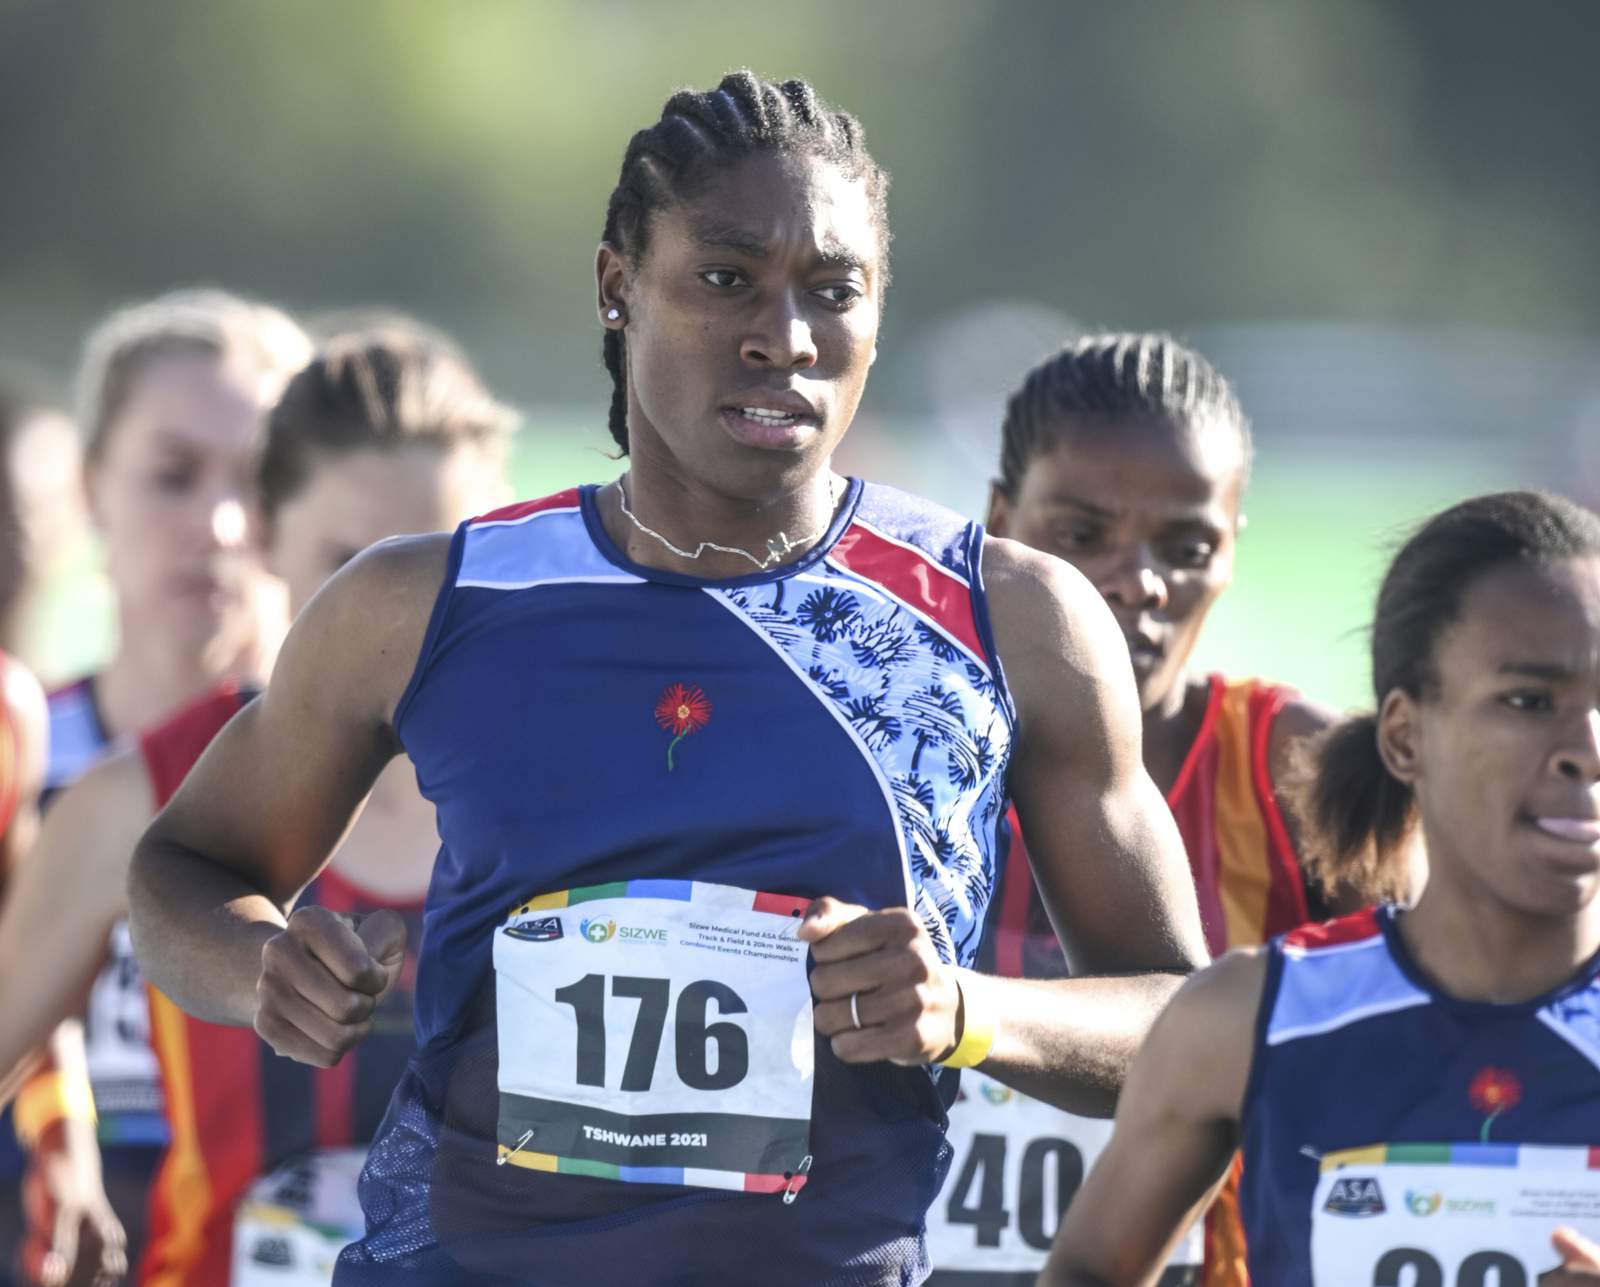 'Distance makes sense:' Semenya pins Olympic hopes on 5,000